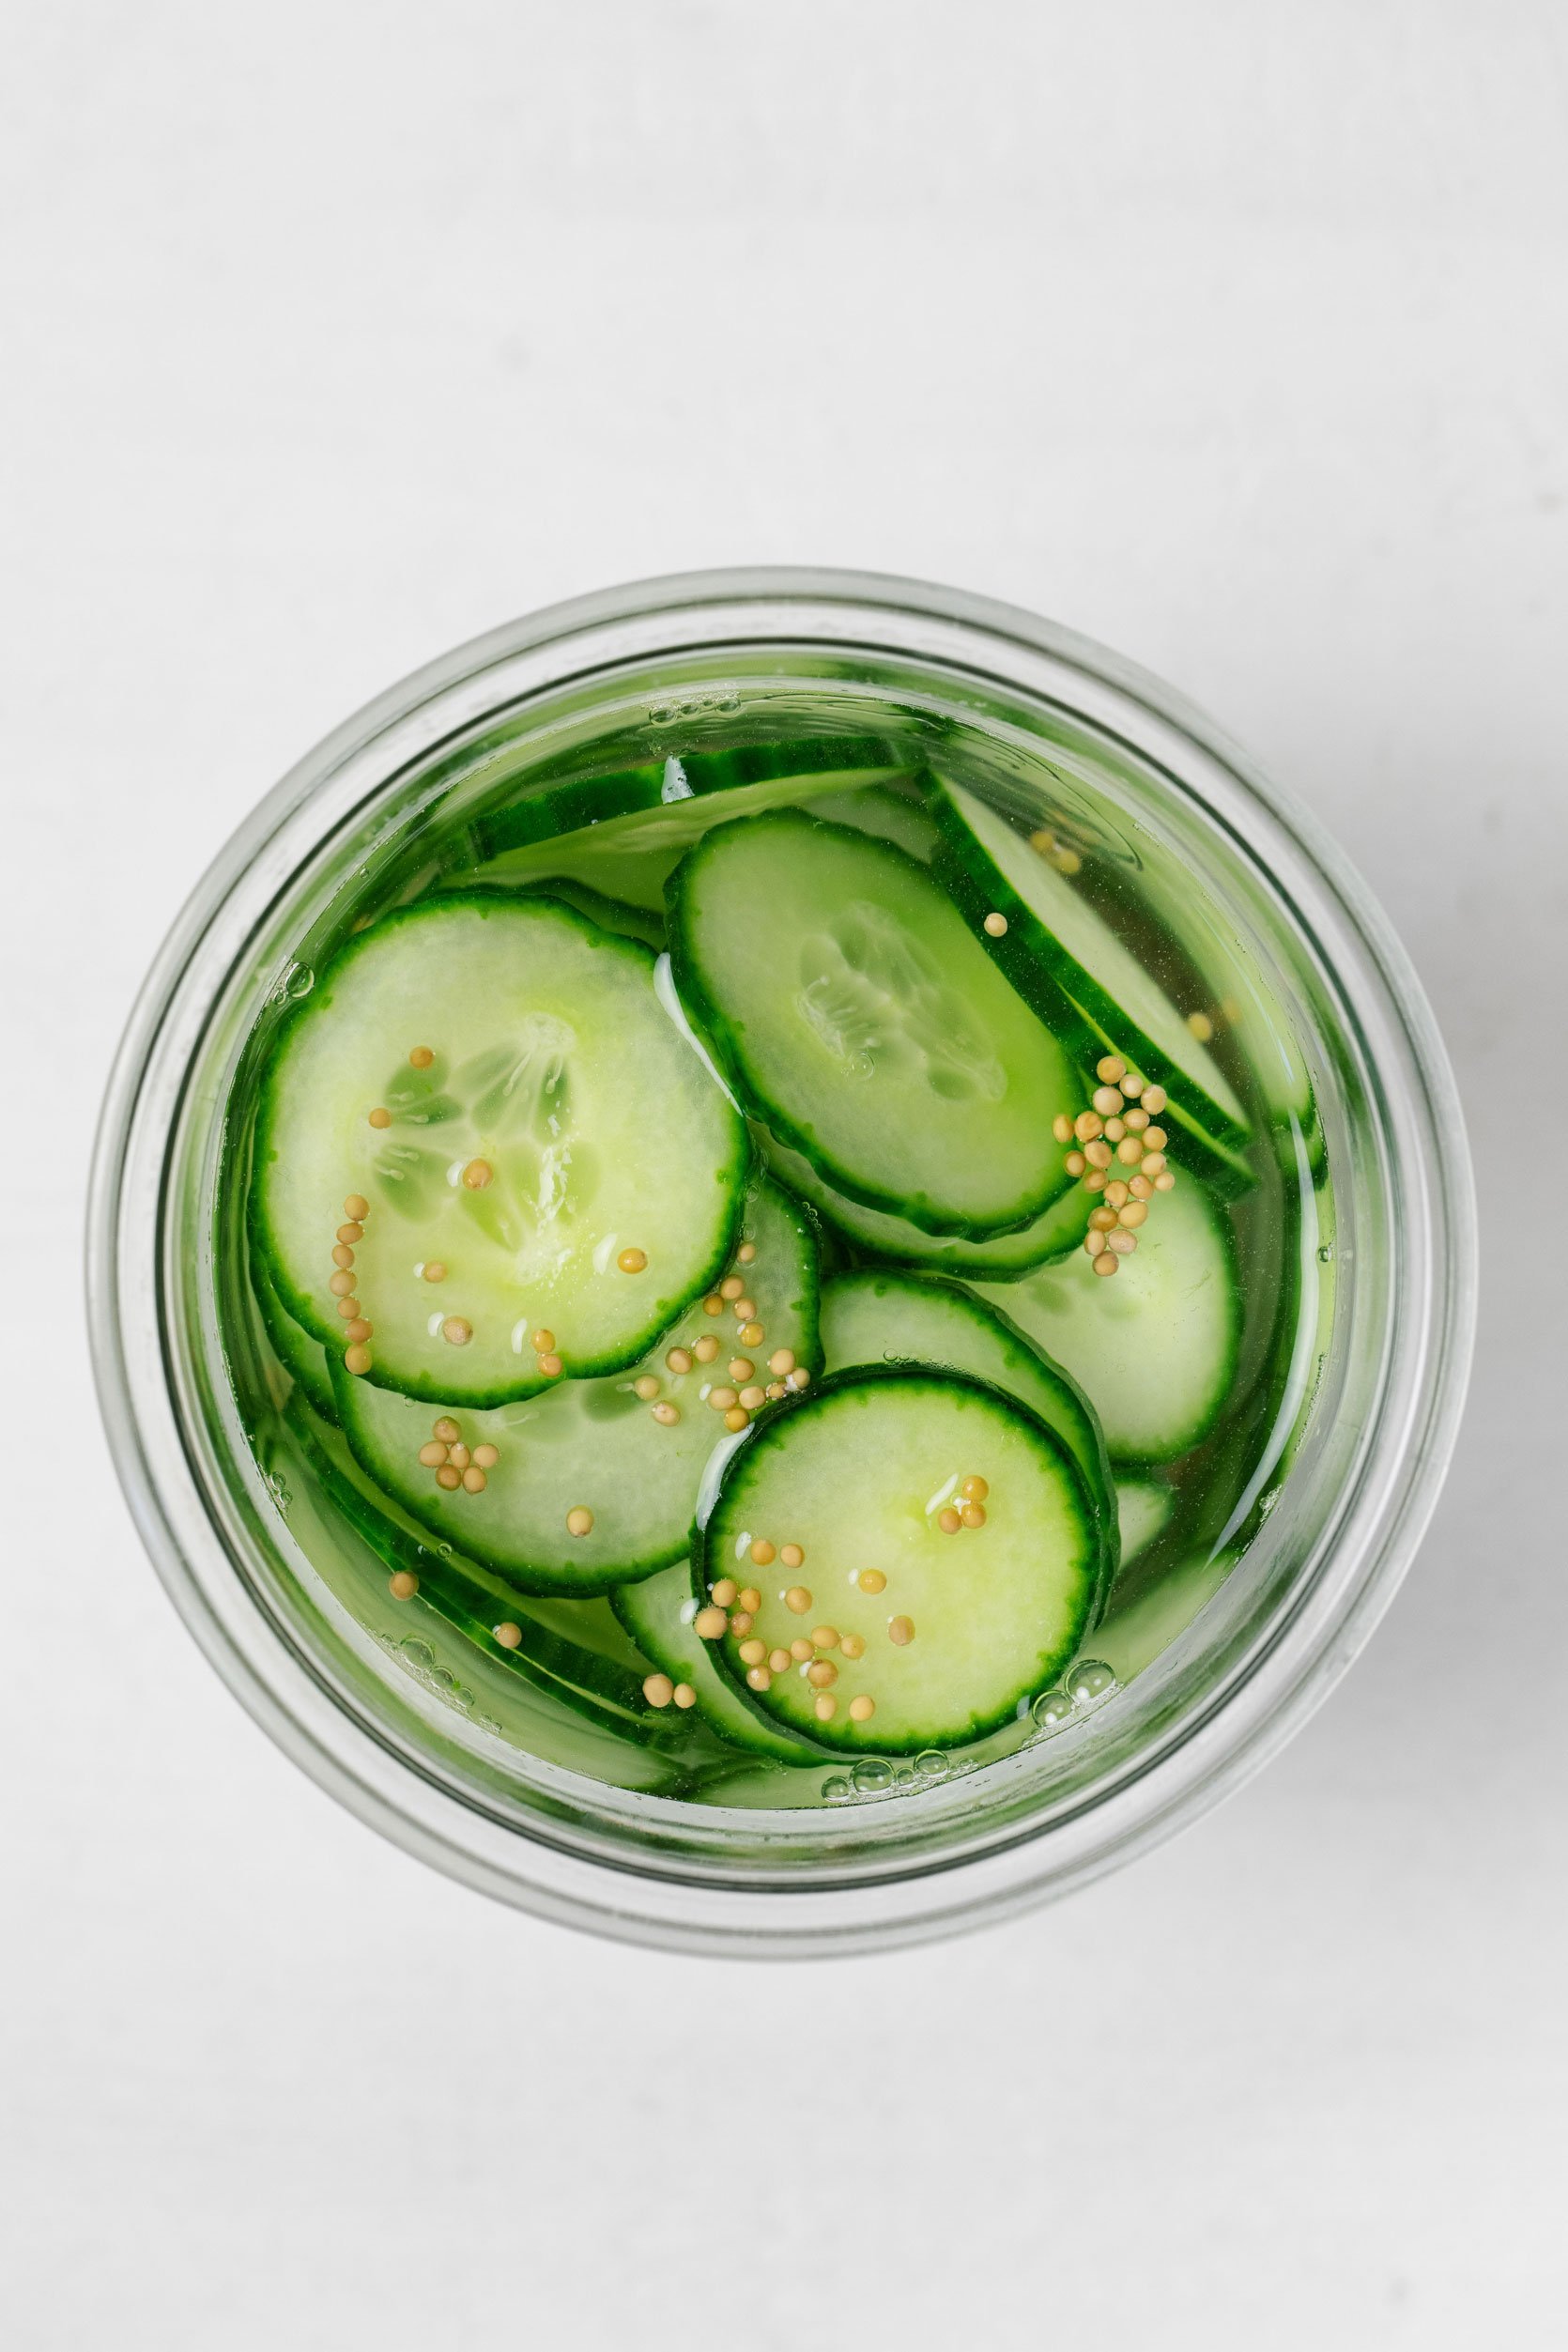 https://www.thefullhelping.com/wp-content/uploads/2023/06/pickled-cucumber-slices-2.jpg